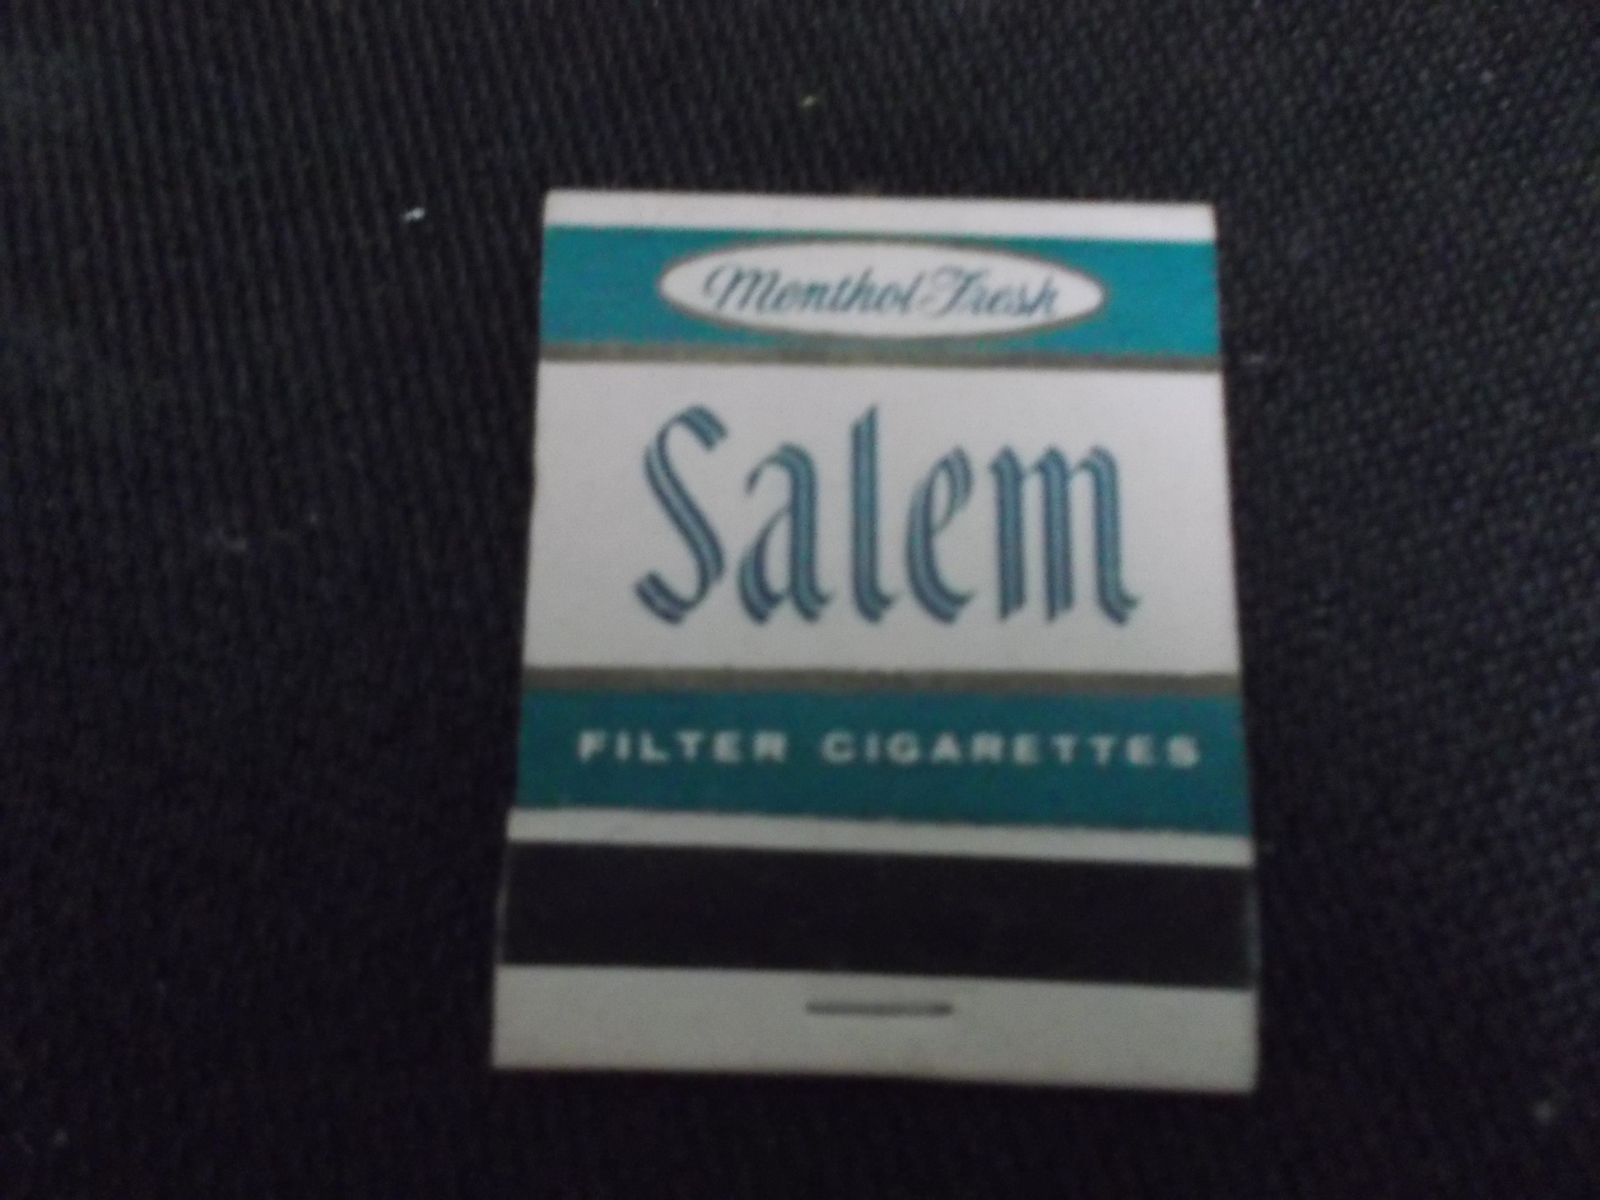 Salem Cigarettes Advertising Used  Match Book - $8.00